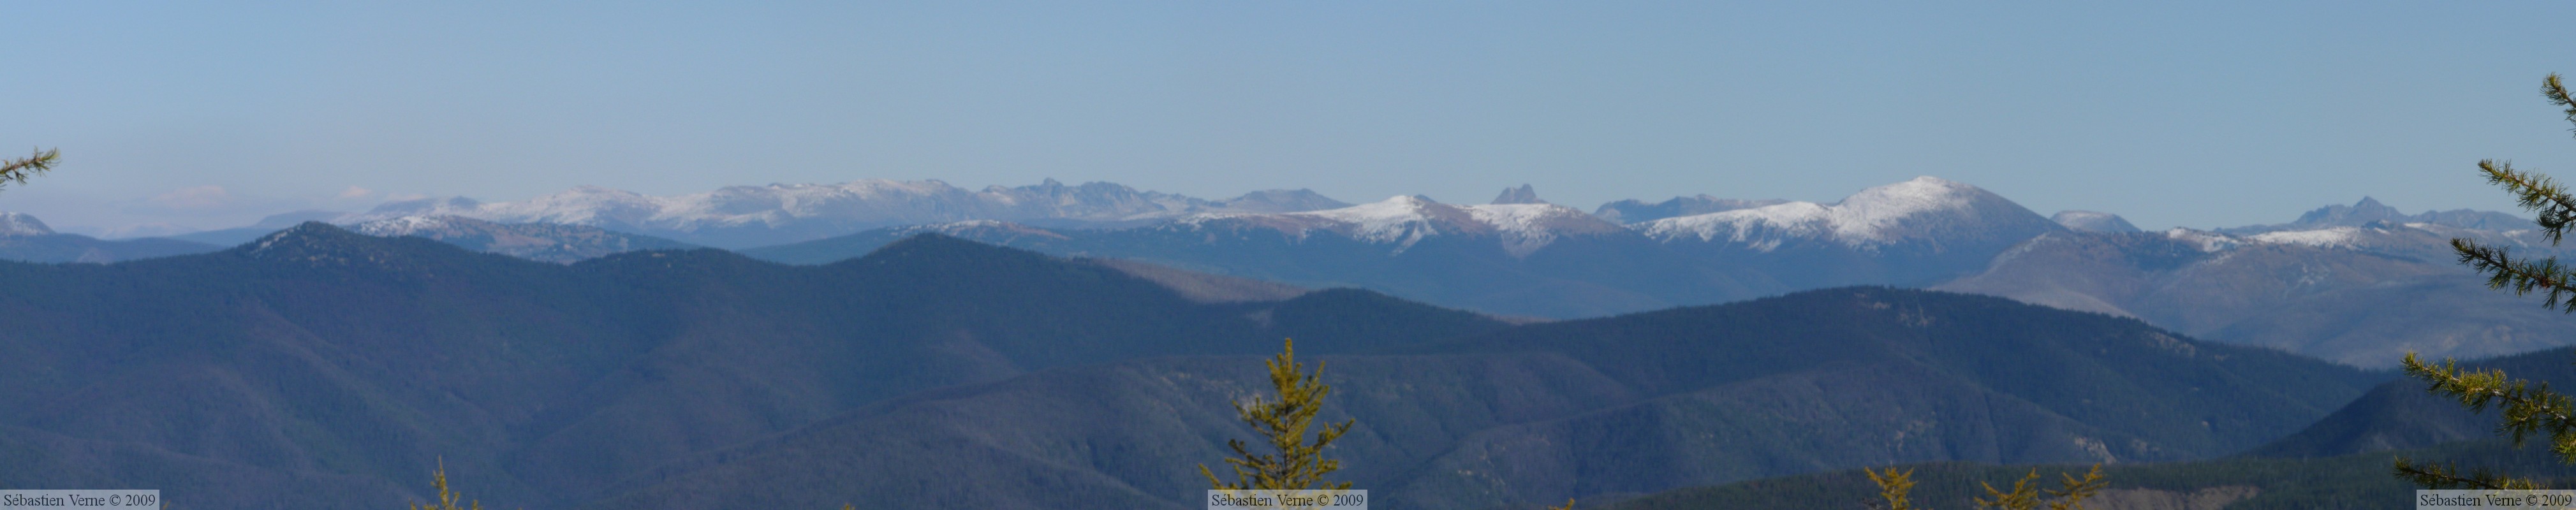 Frosty Mountain panorama 5.jpg